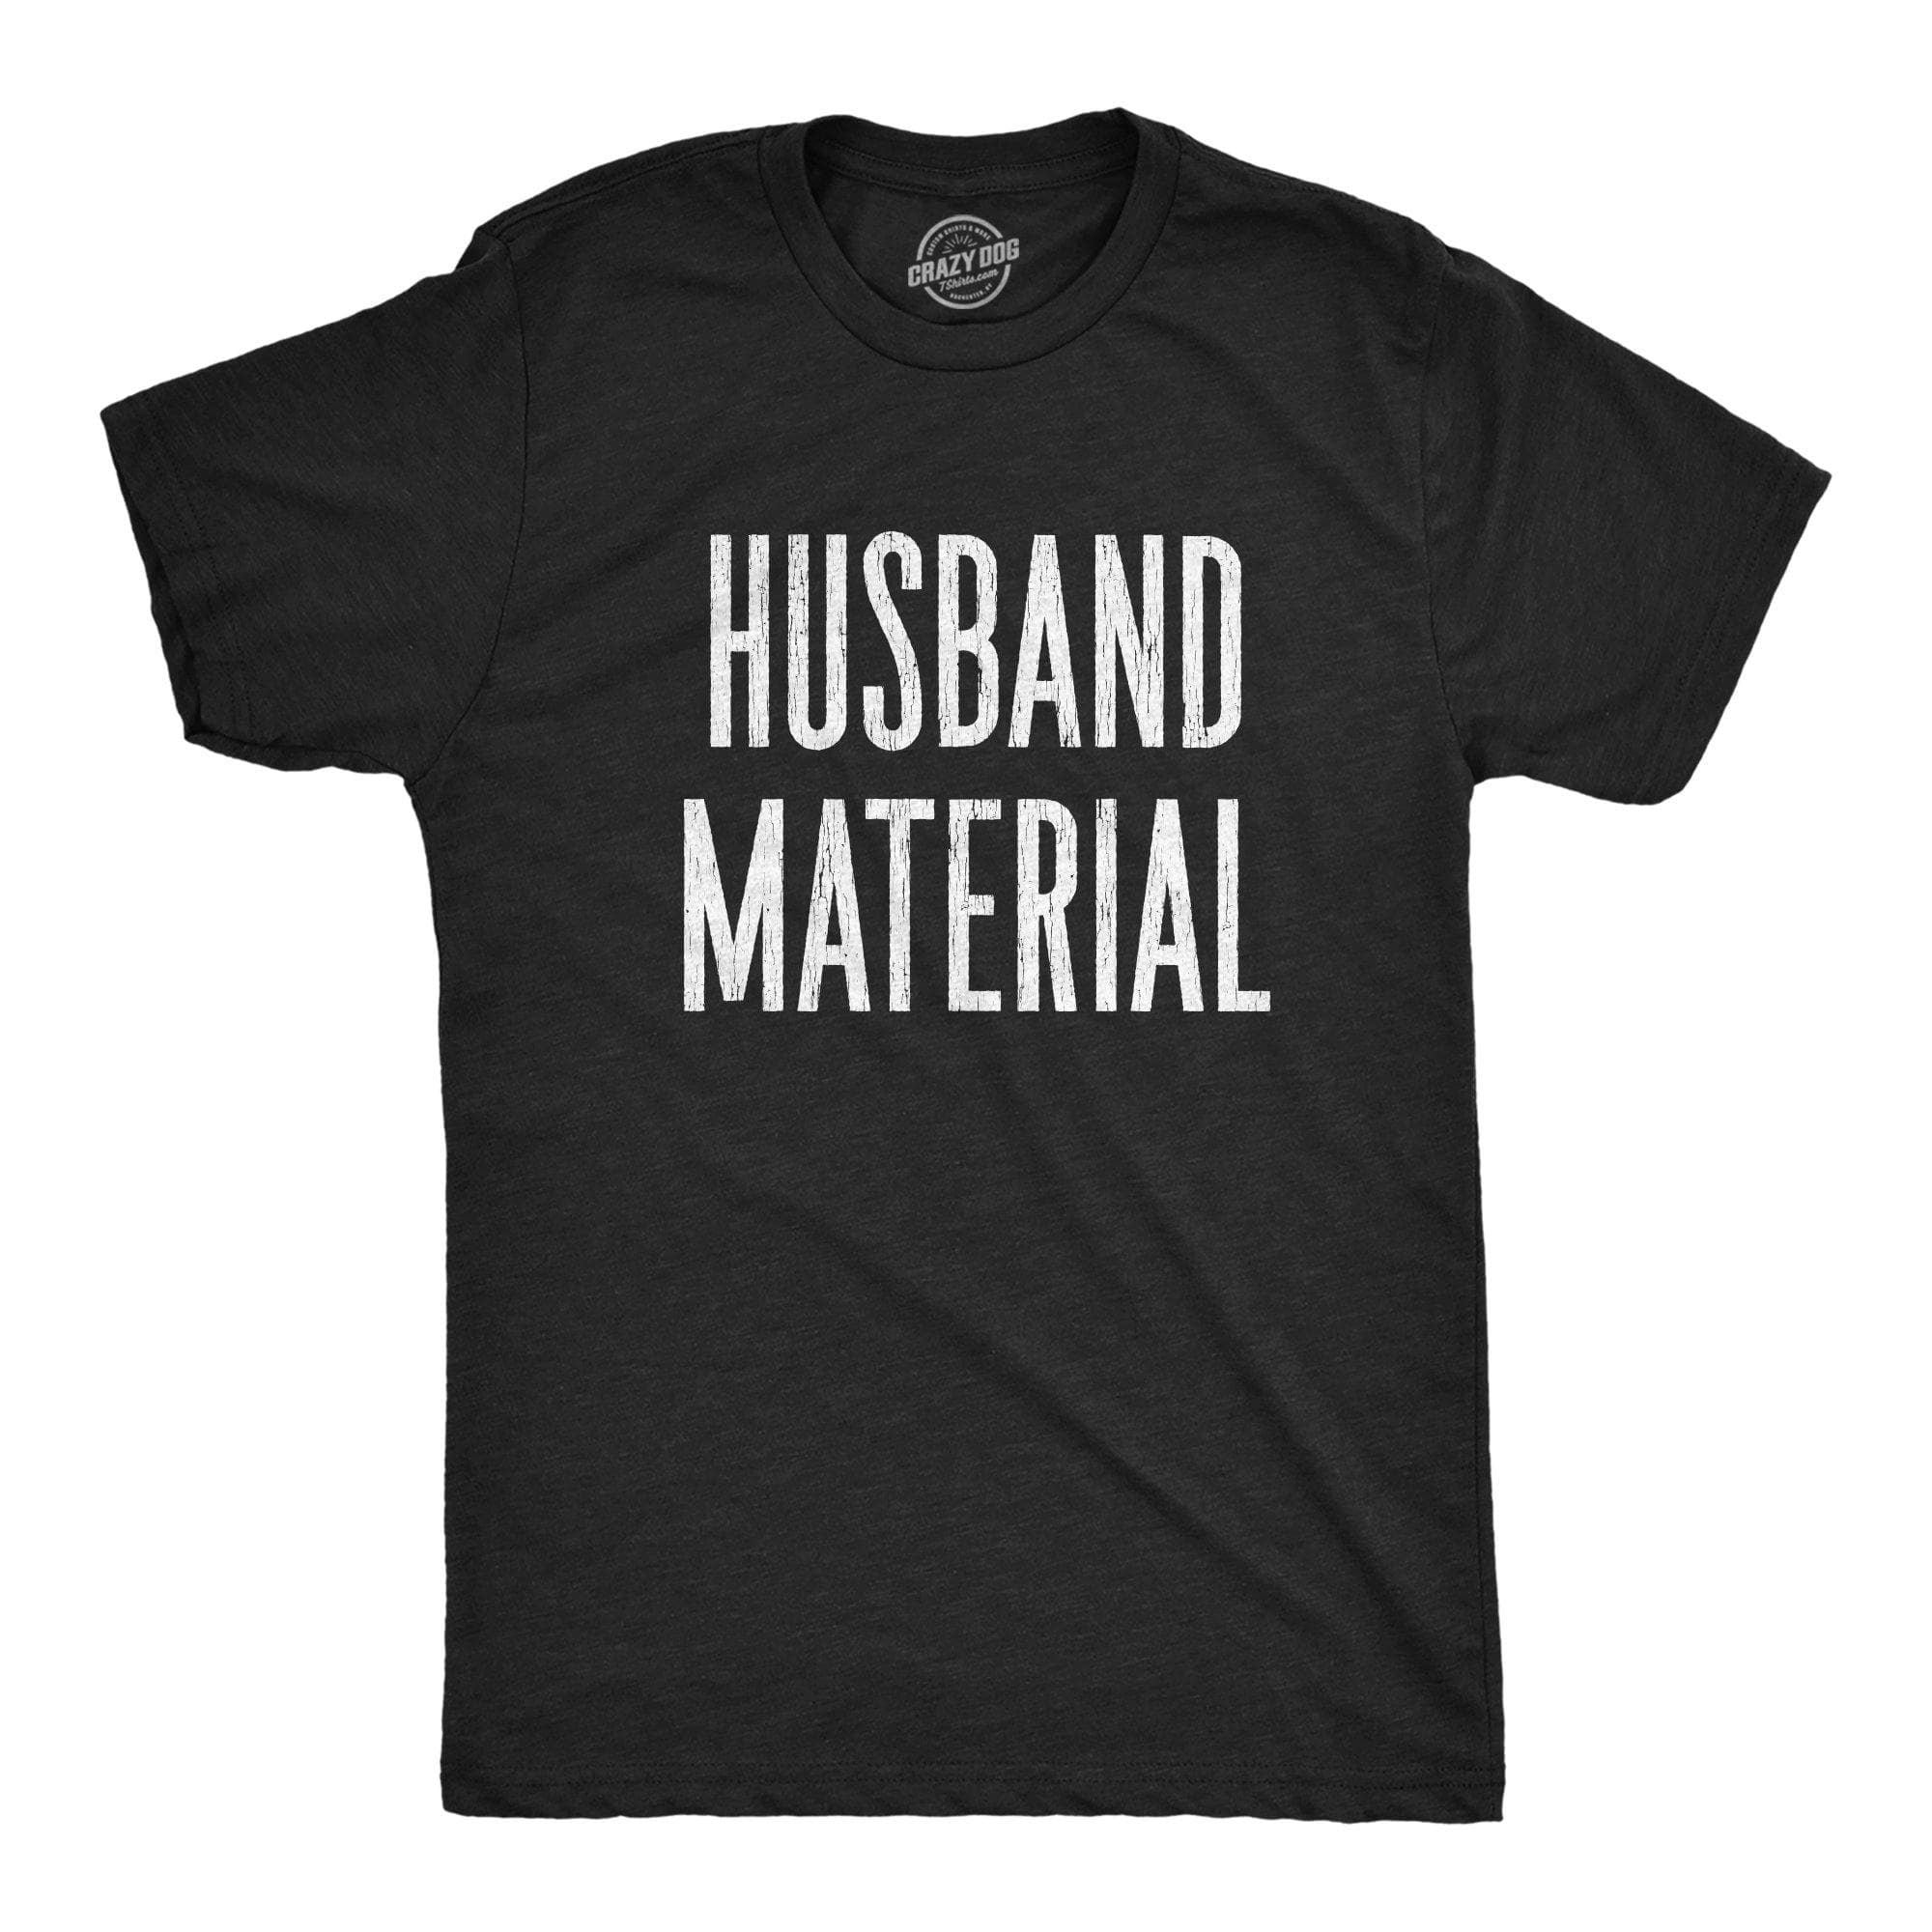 Husband Marterial Men's Tshirt - Crazy Dog T-Shirts